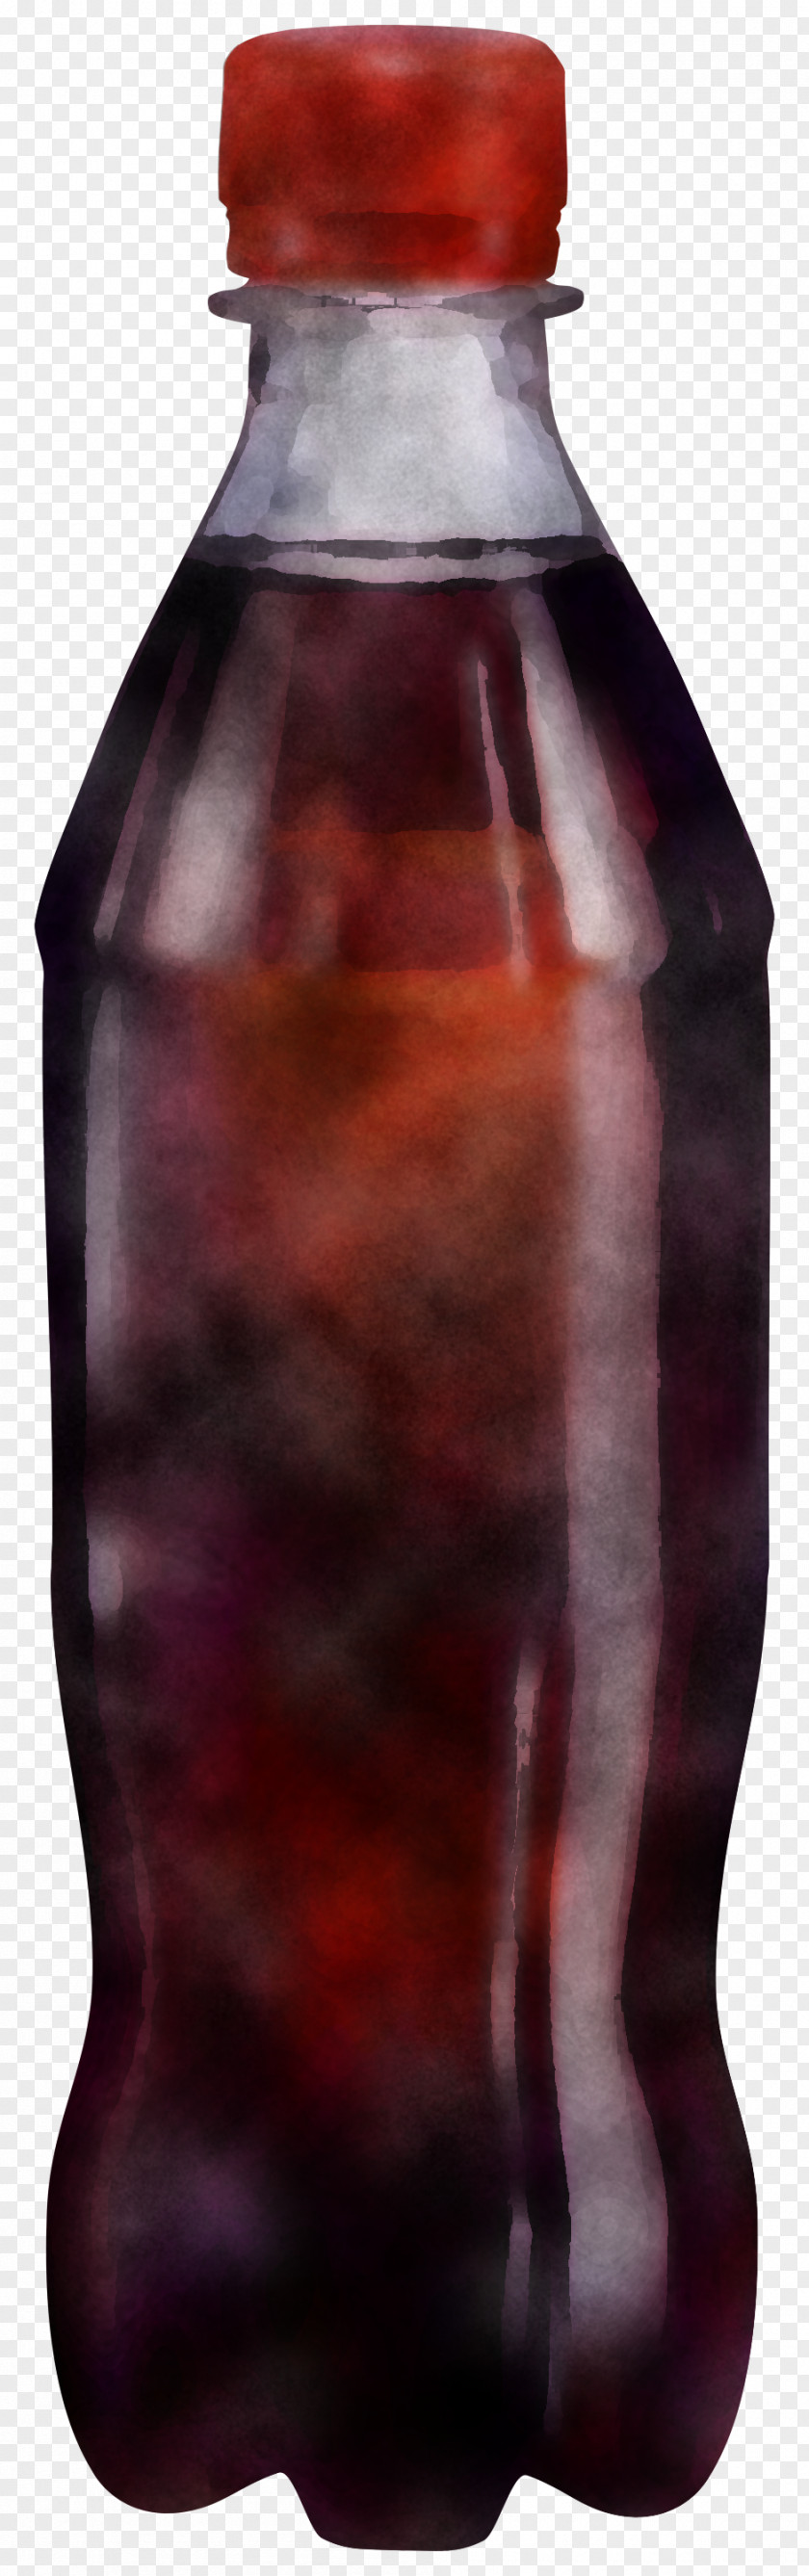 Bottle Drink Glass Grape Juice PNG